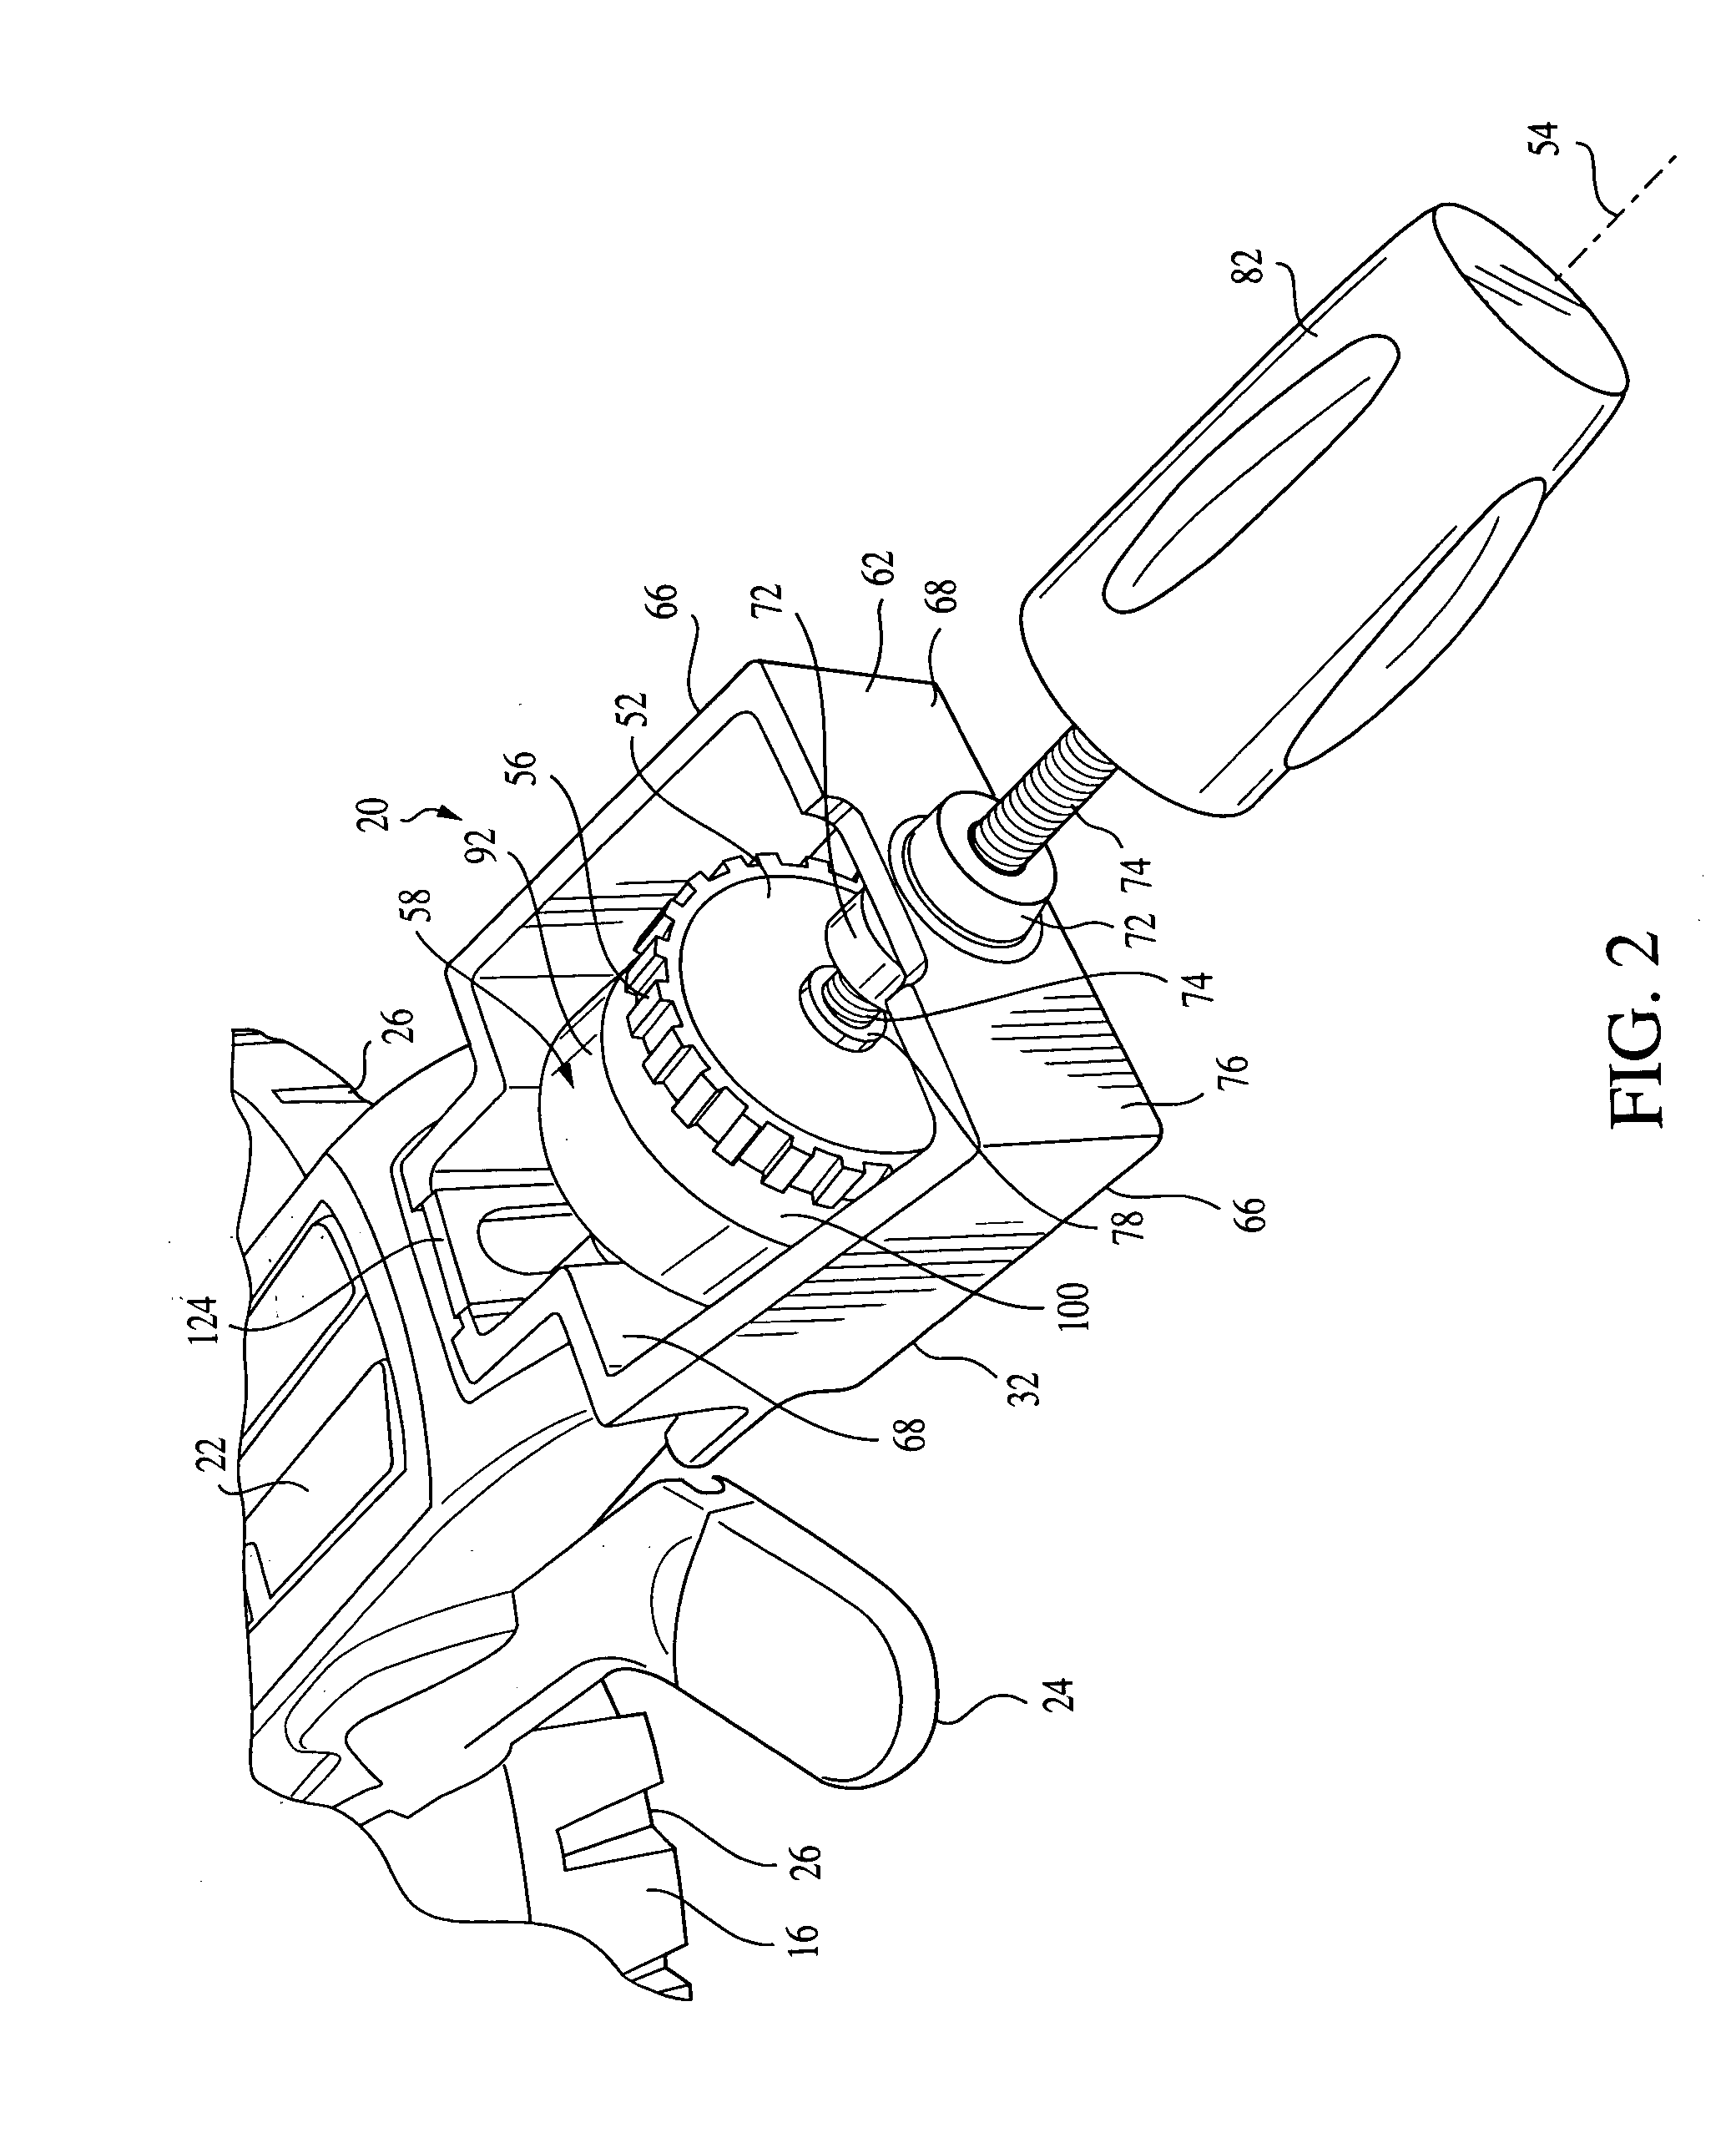 Angular adjustment apparatus for a miter saw